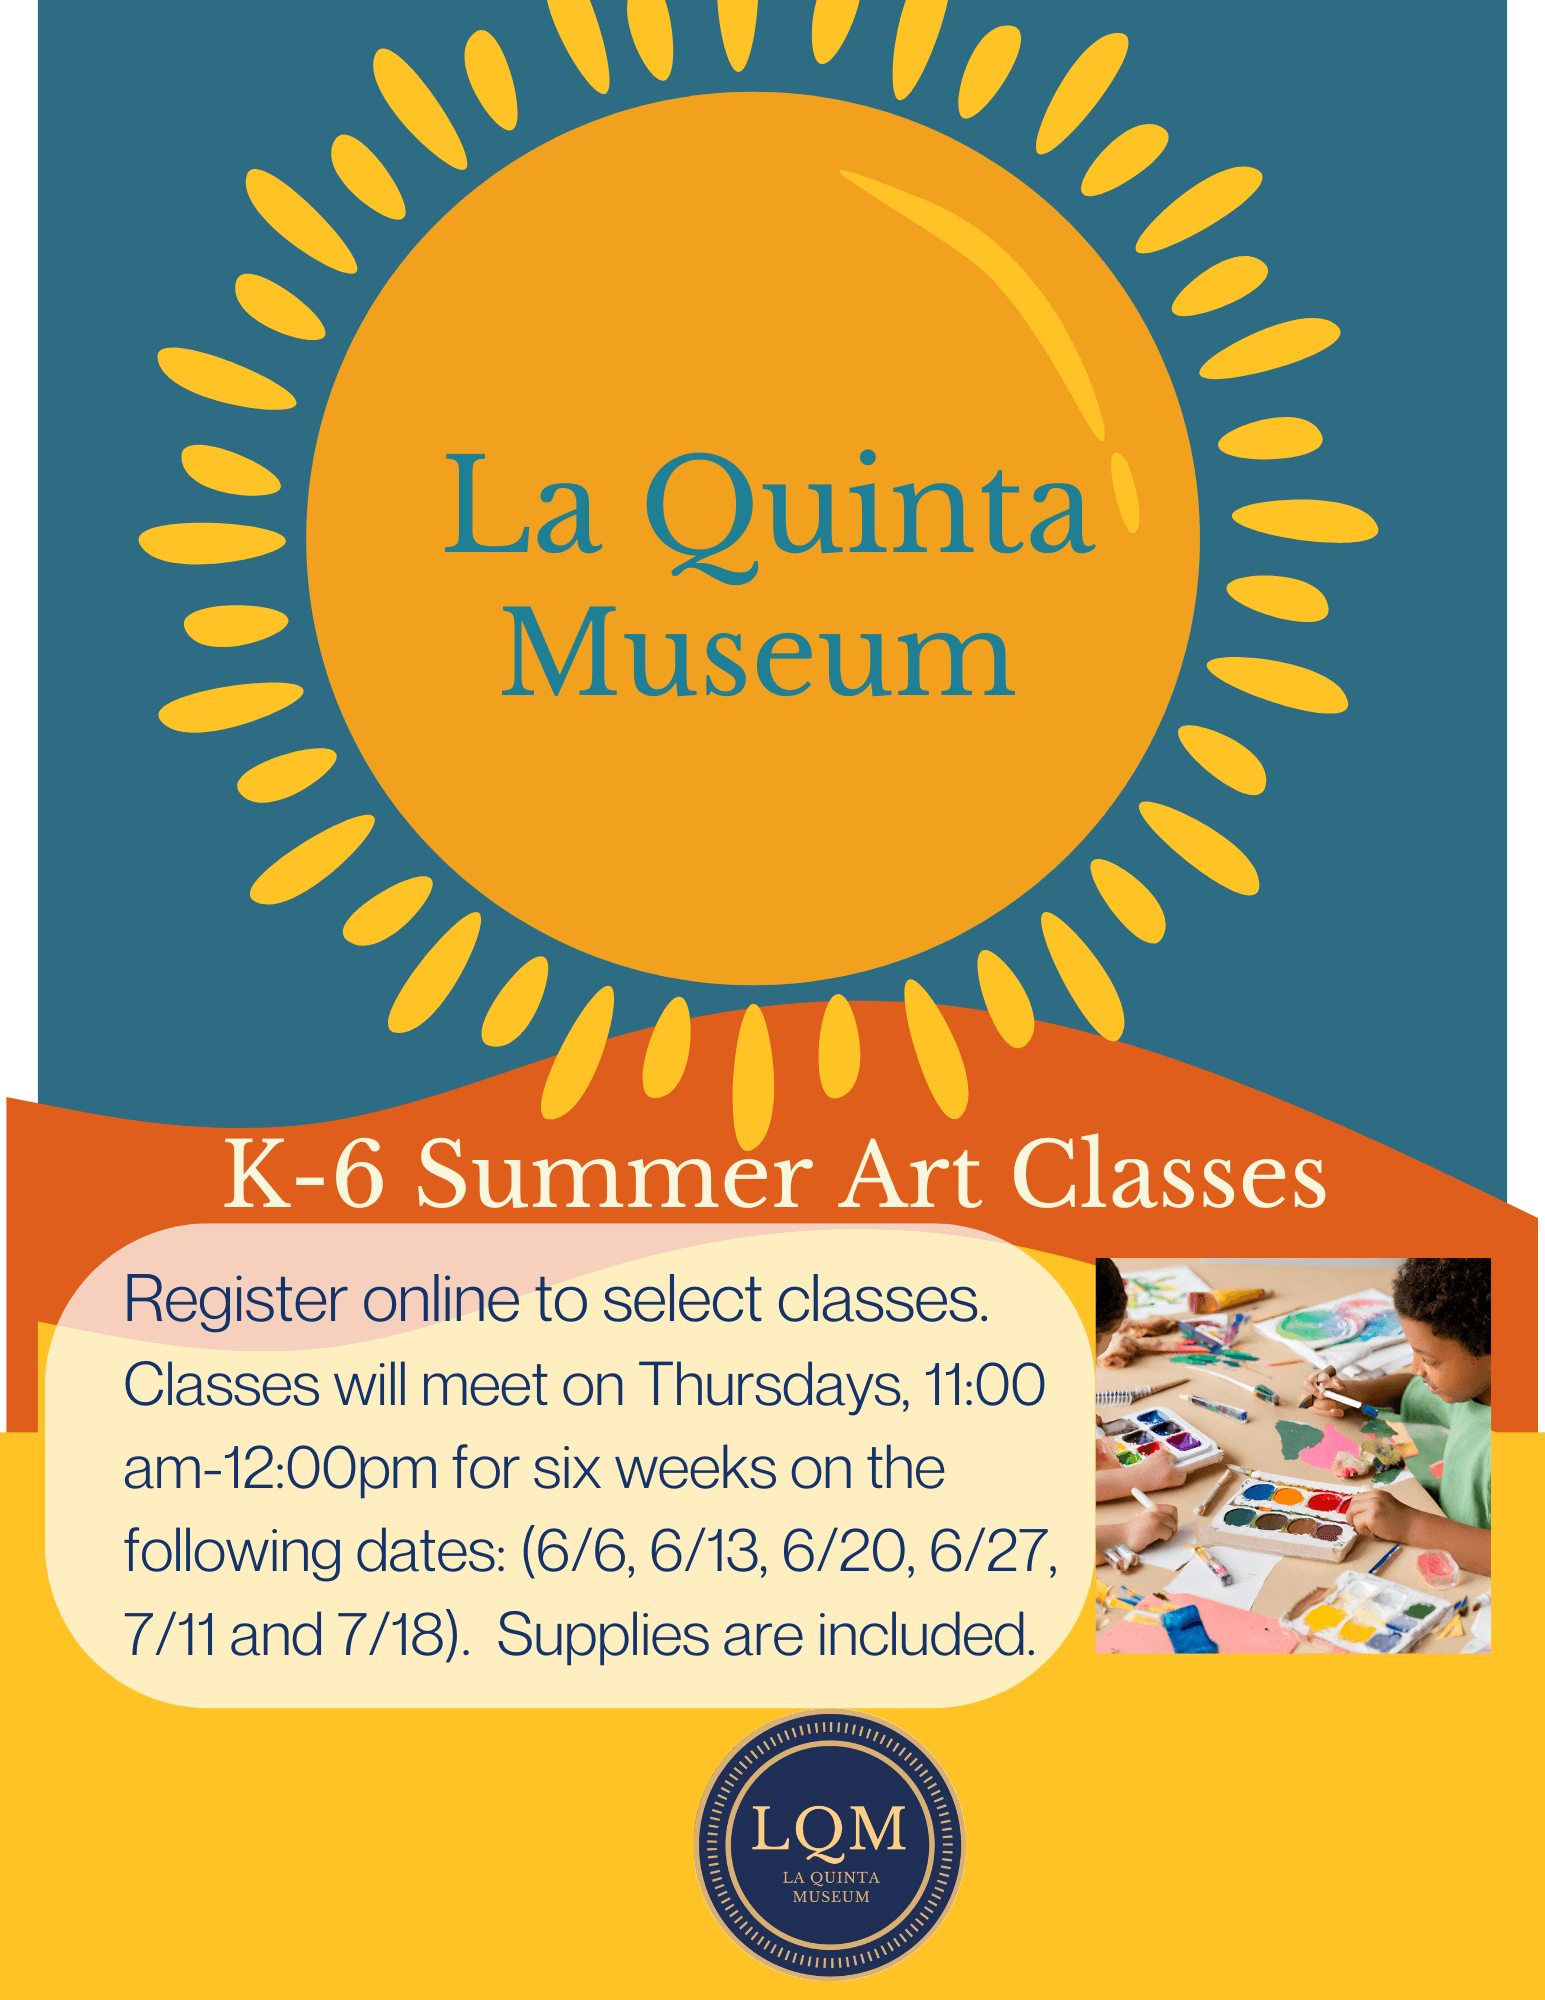 K-6 Summer Art Classes at the Museum!